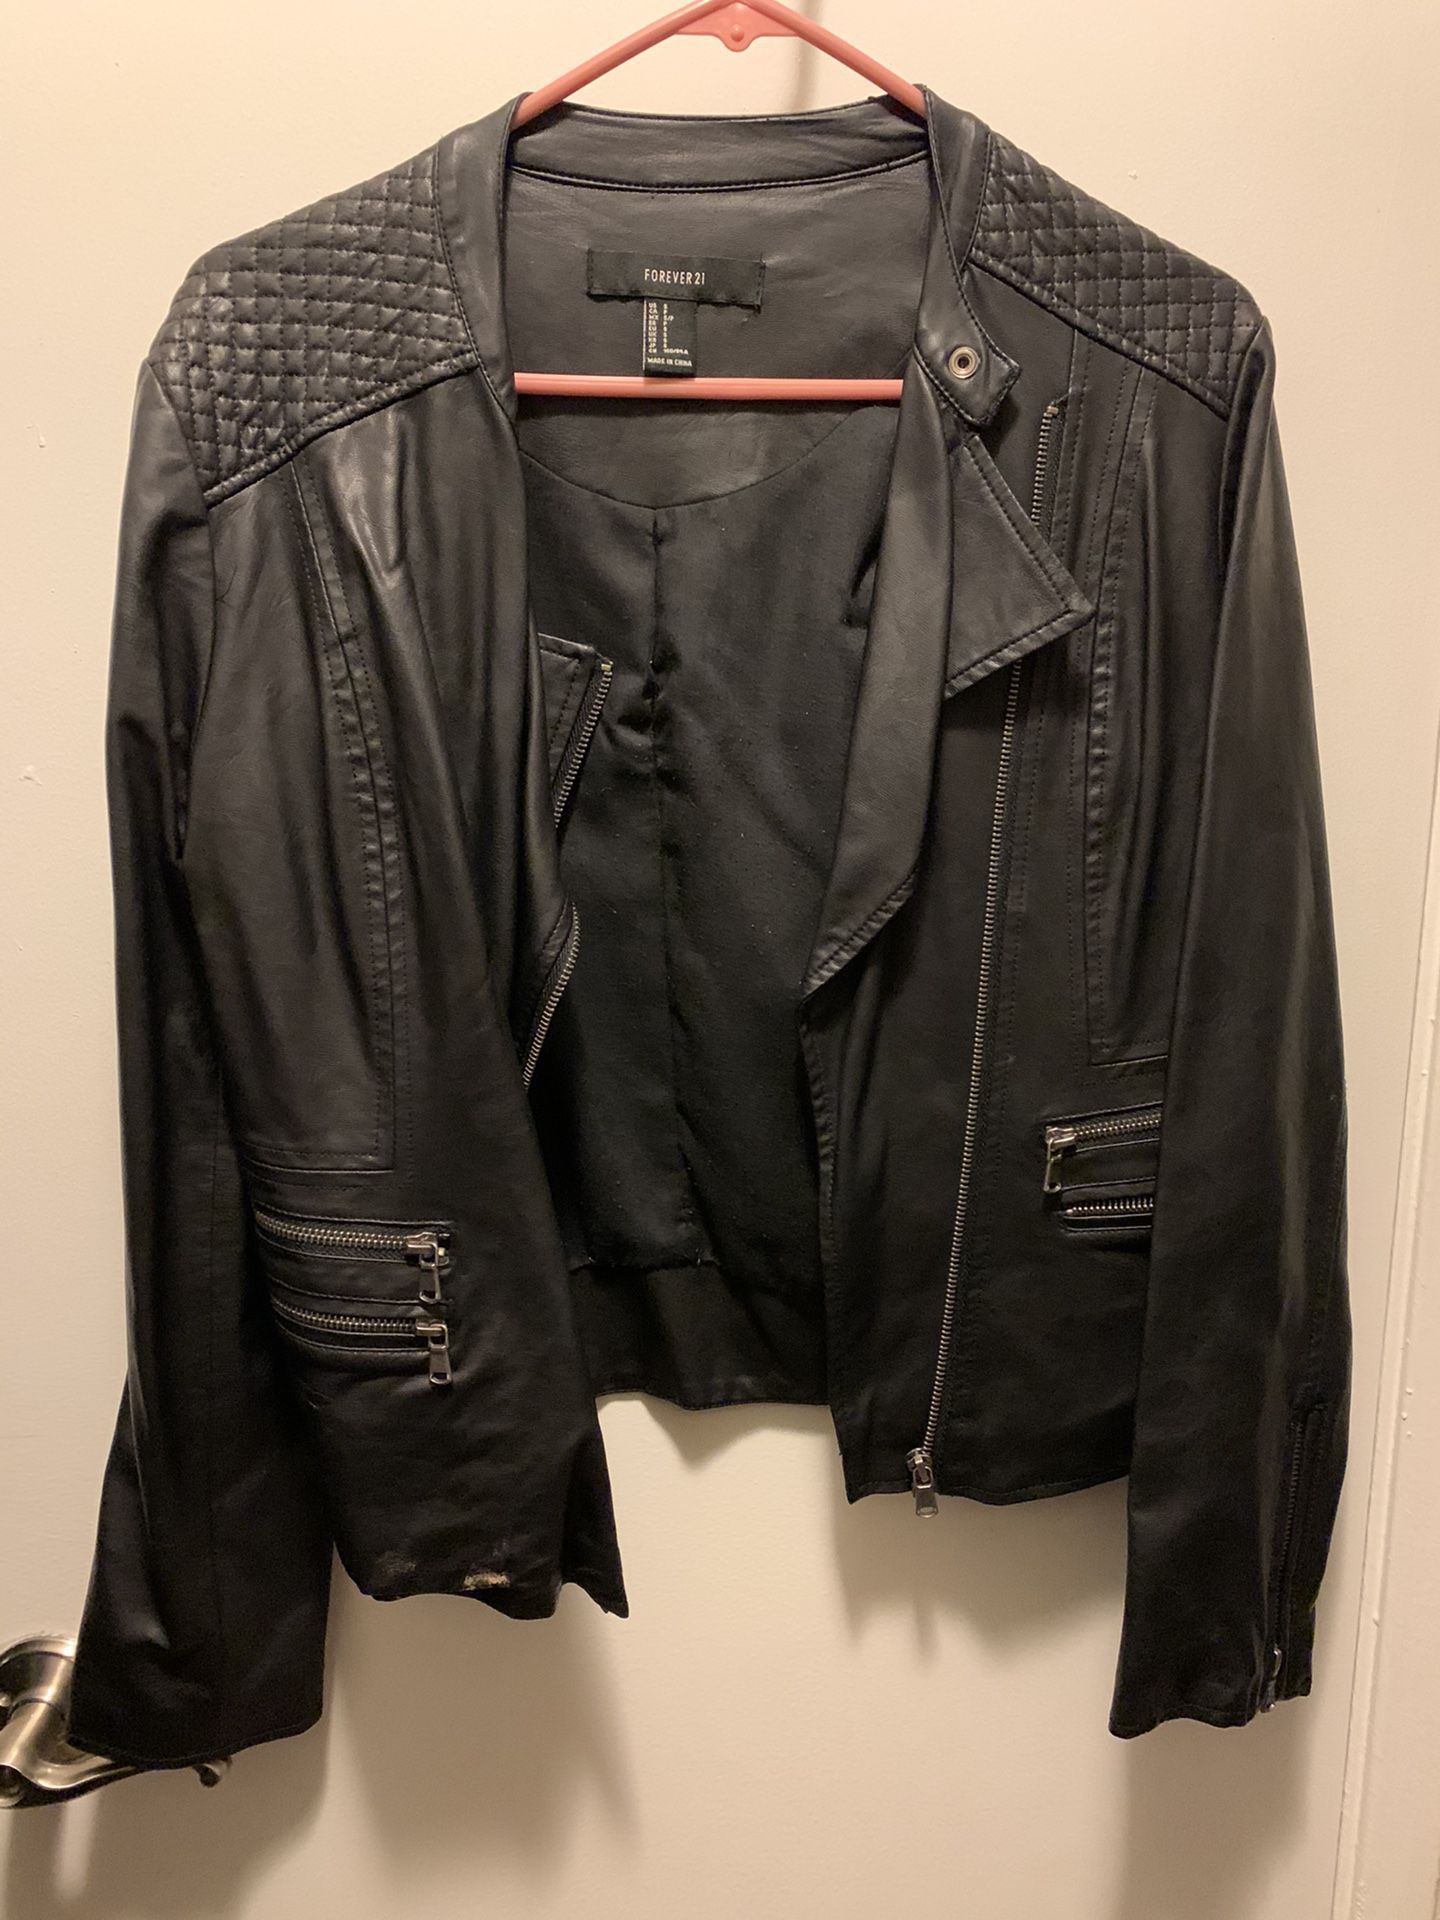 Size small black leather jacket